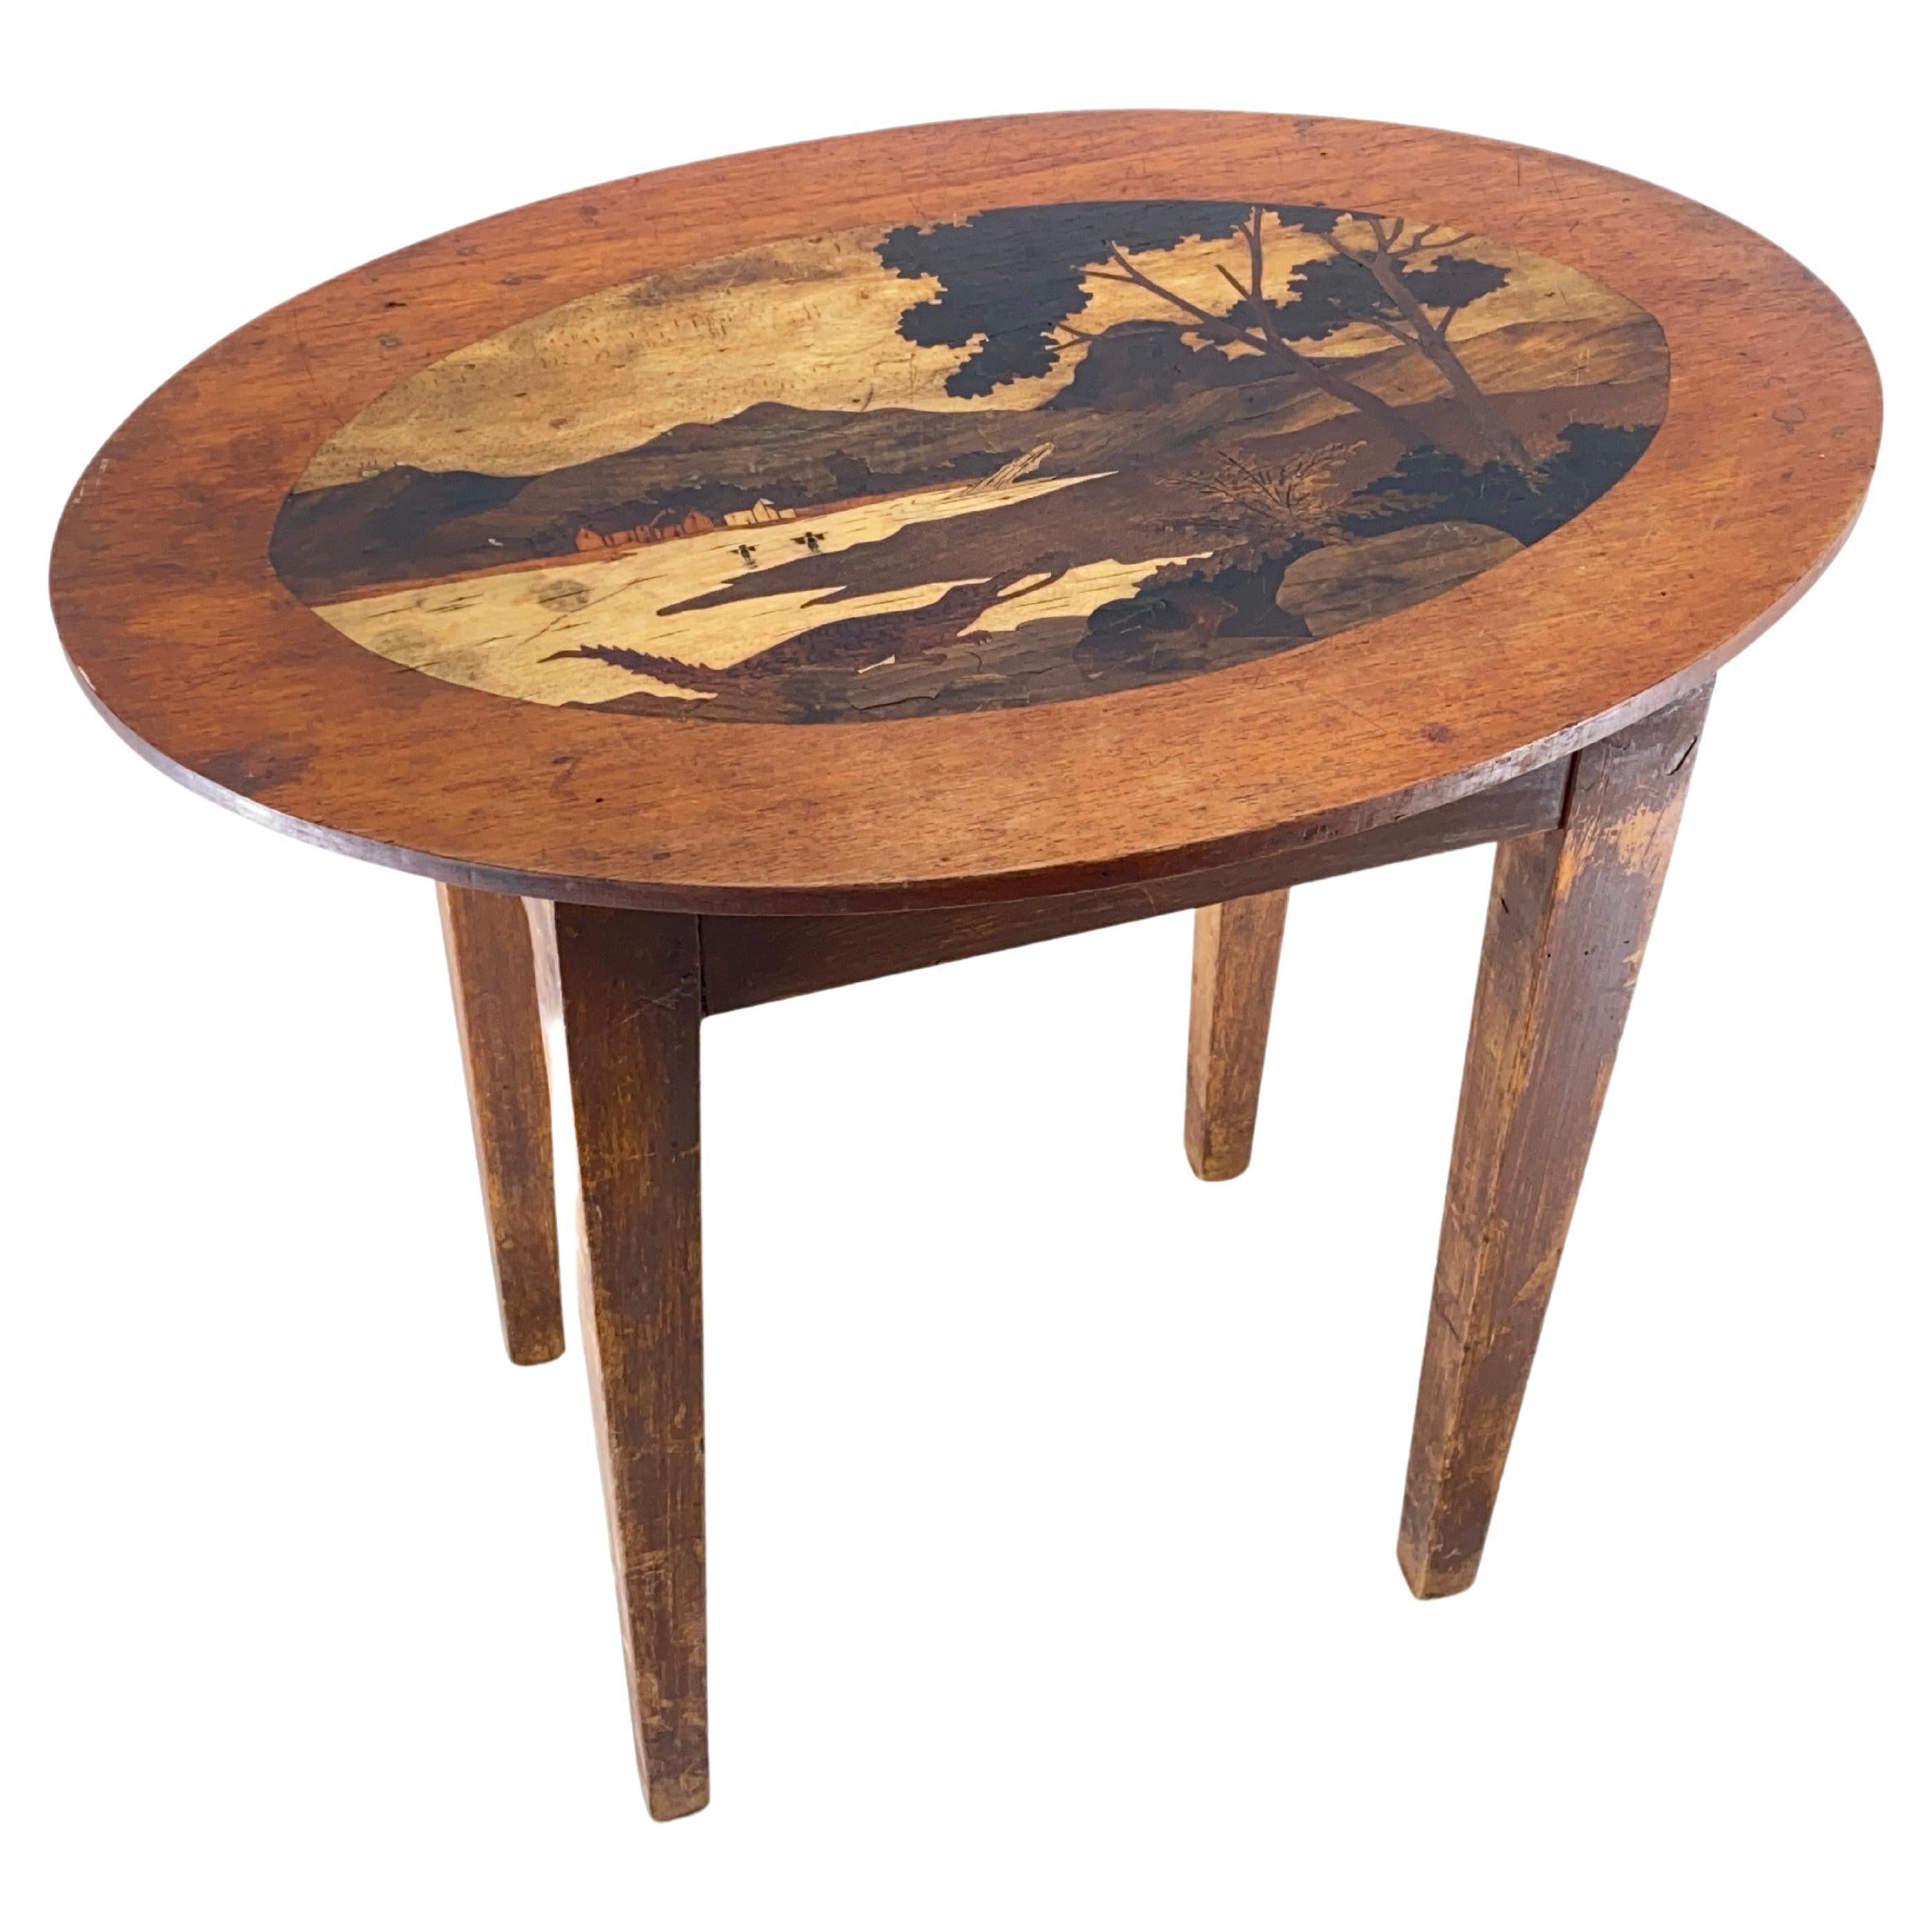 Art Nouveau Marquetry Table, Wood, Brown Color, France 1920